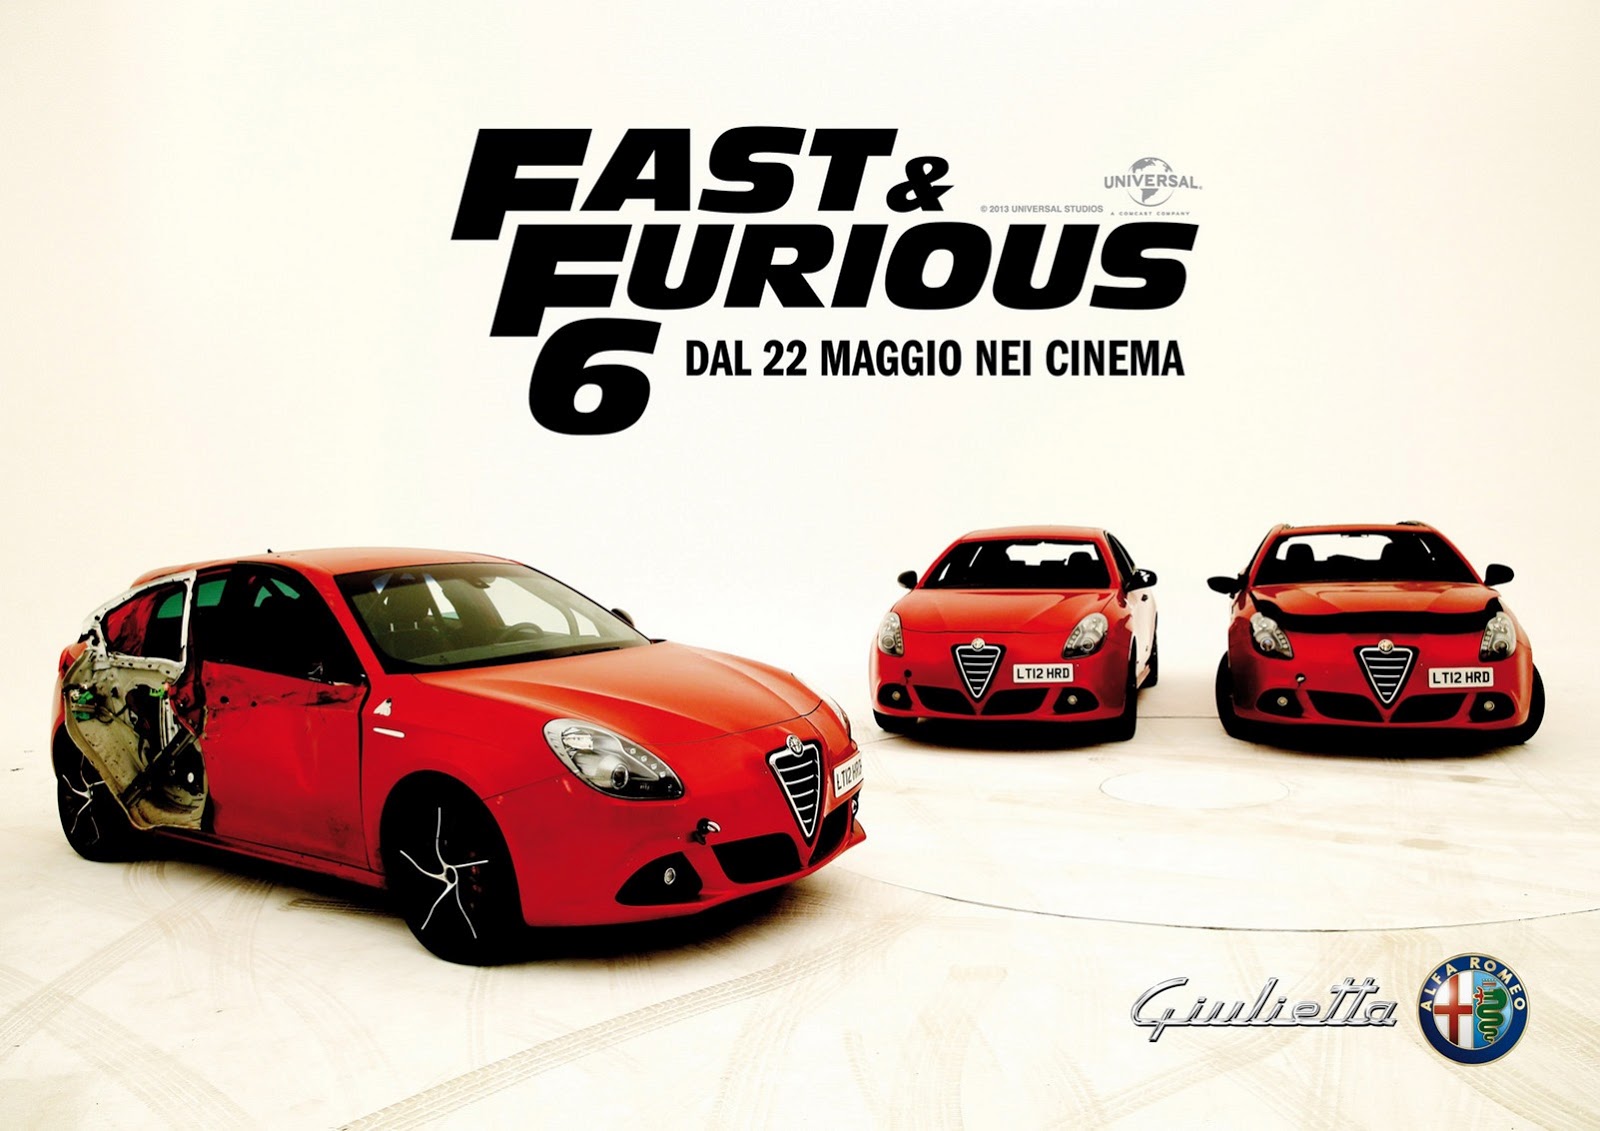 Alfa Romeo, Iklan mobil Alfa Romeo Giulietta bertema film Fast and Furious 6: Iklan Alfa Romeo Giulietta yang Bertema Fast & Furious 6